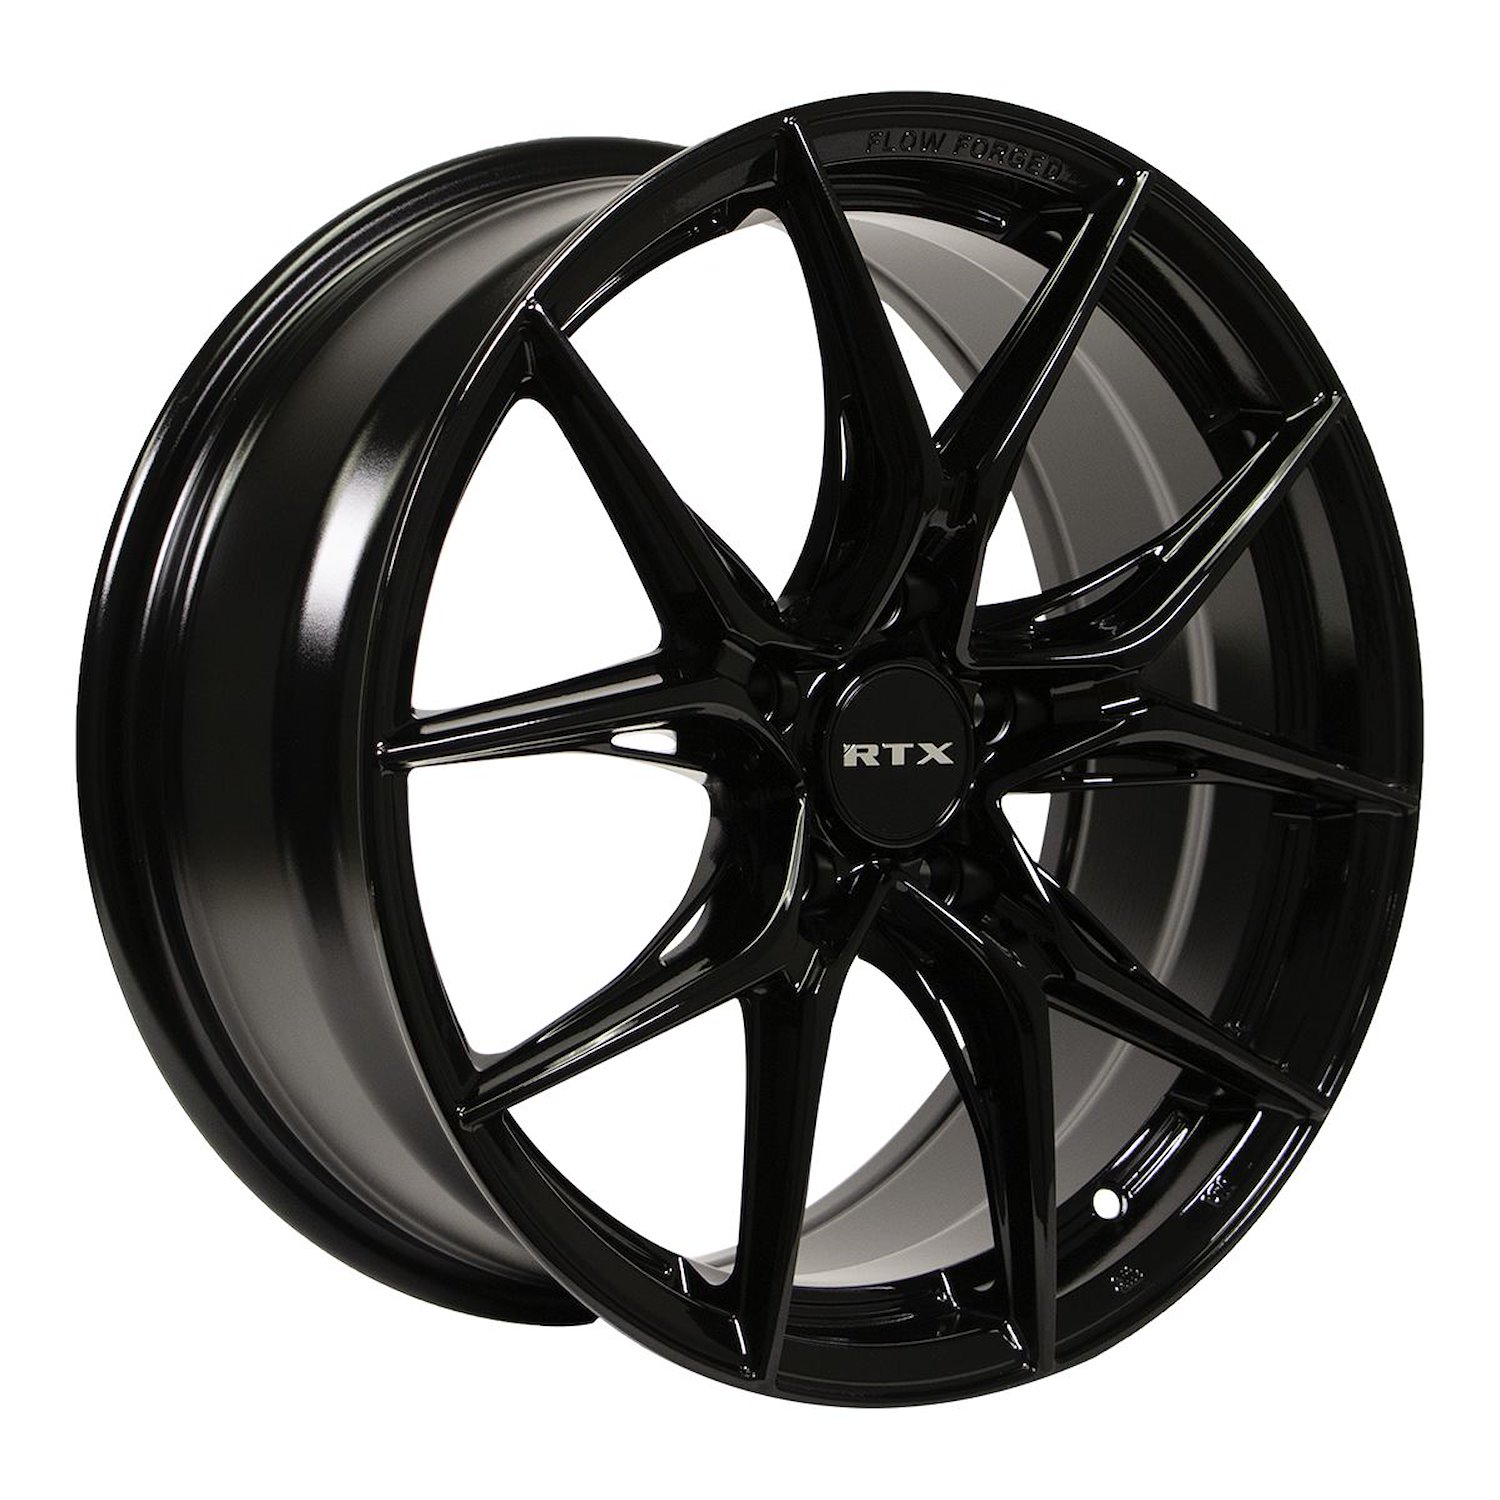 082842 RTX-Series Slick Wheel [Size: 18" x 8.50"] Gloss Black Finish